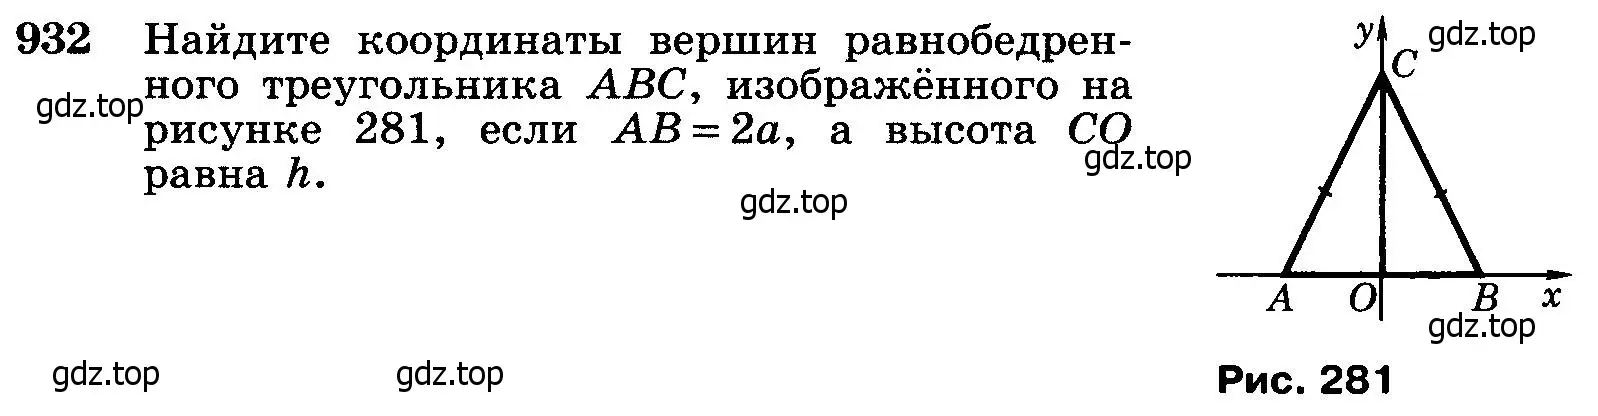 Условие номер 932 (страница 232) гдз по геометрии 7-9 класс Атанасян, Бутузов, учебник